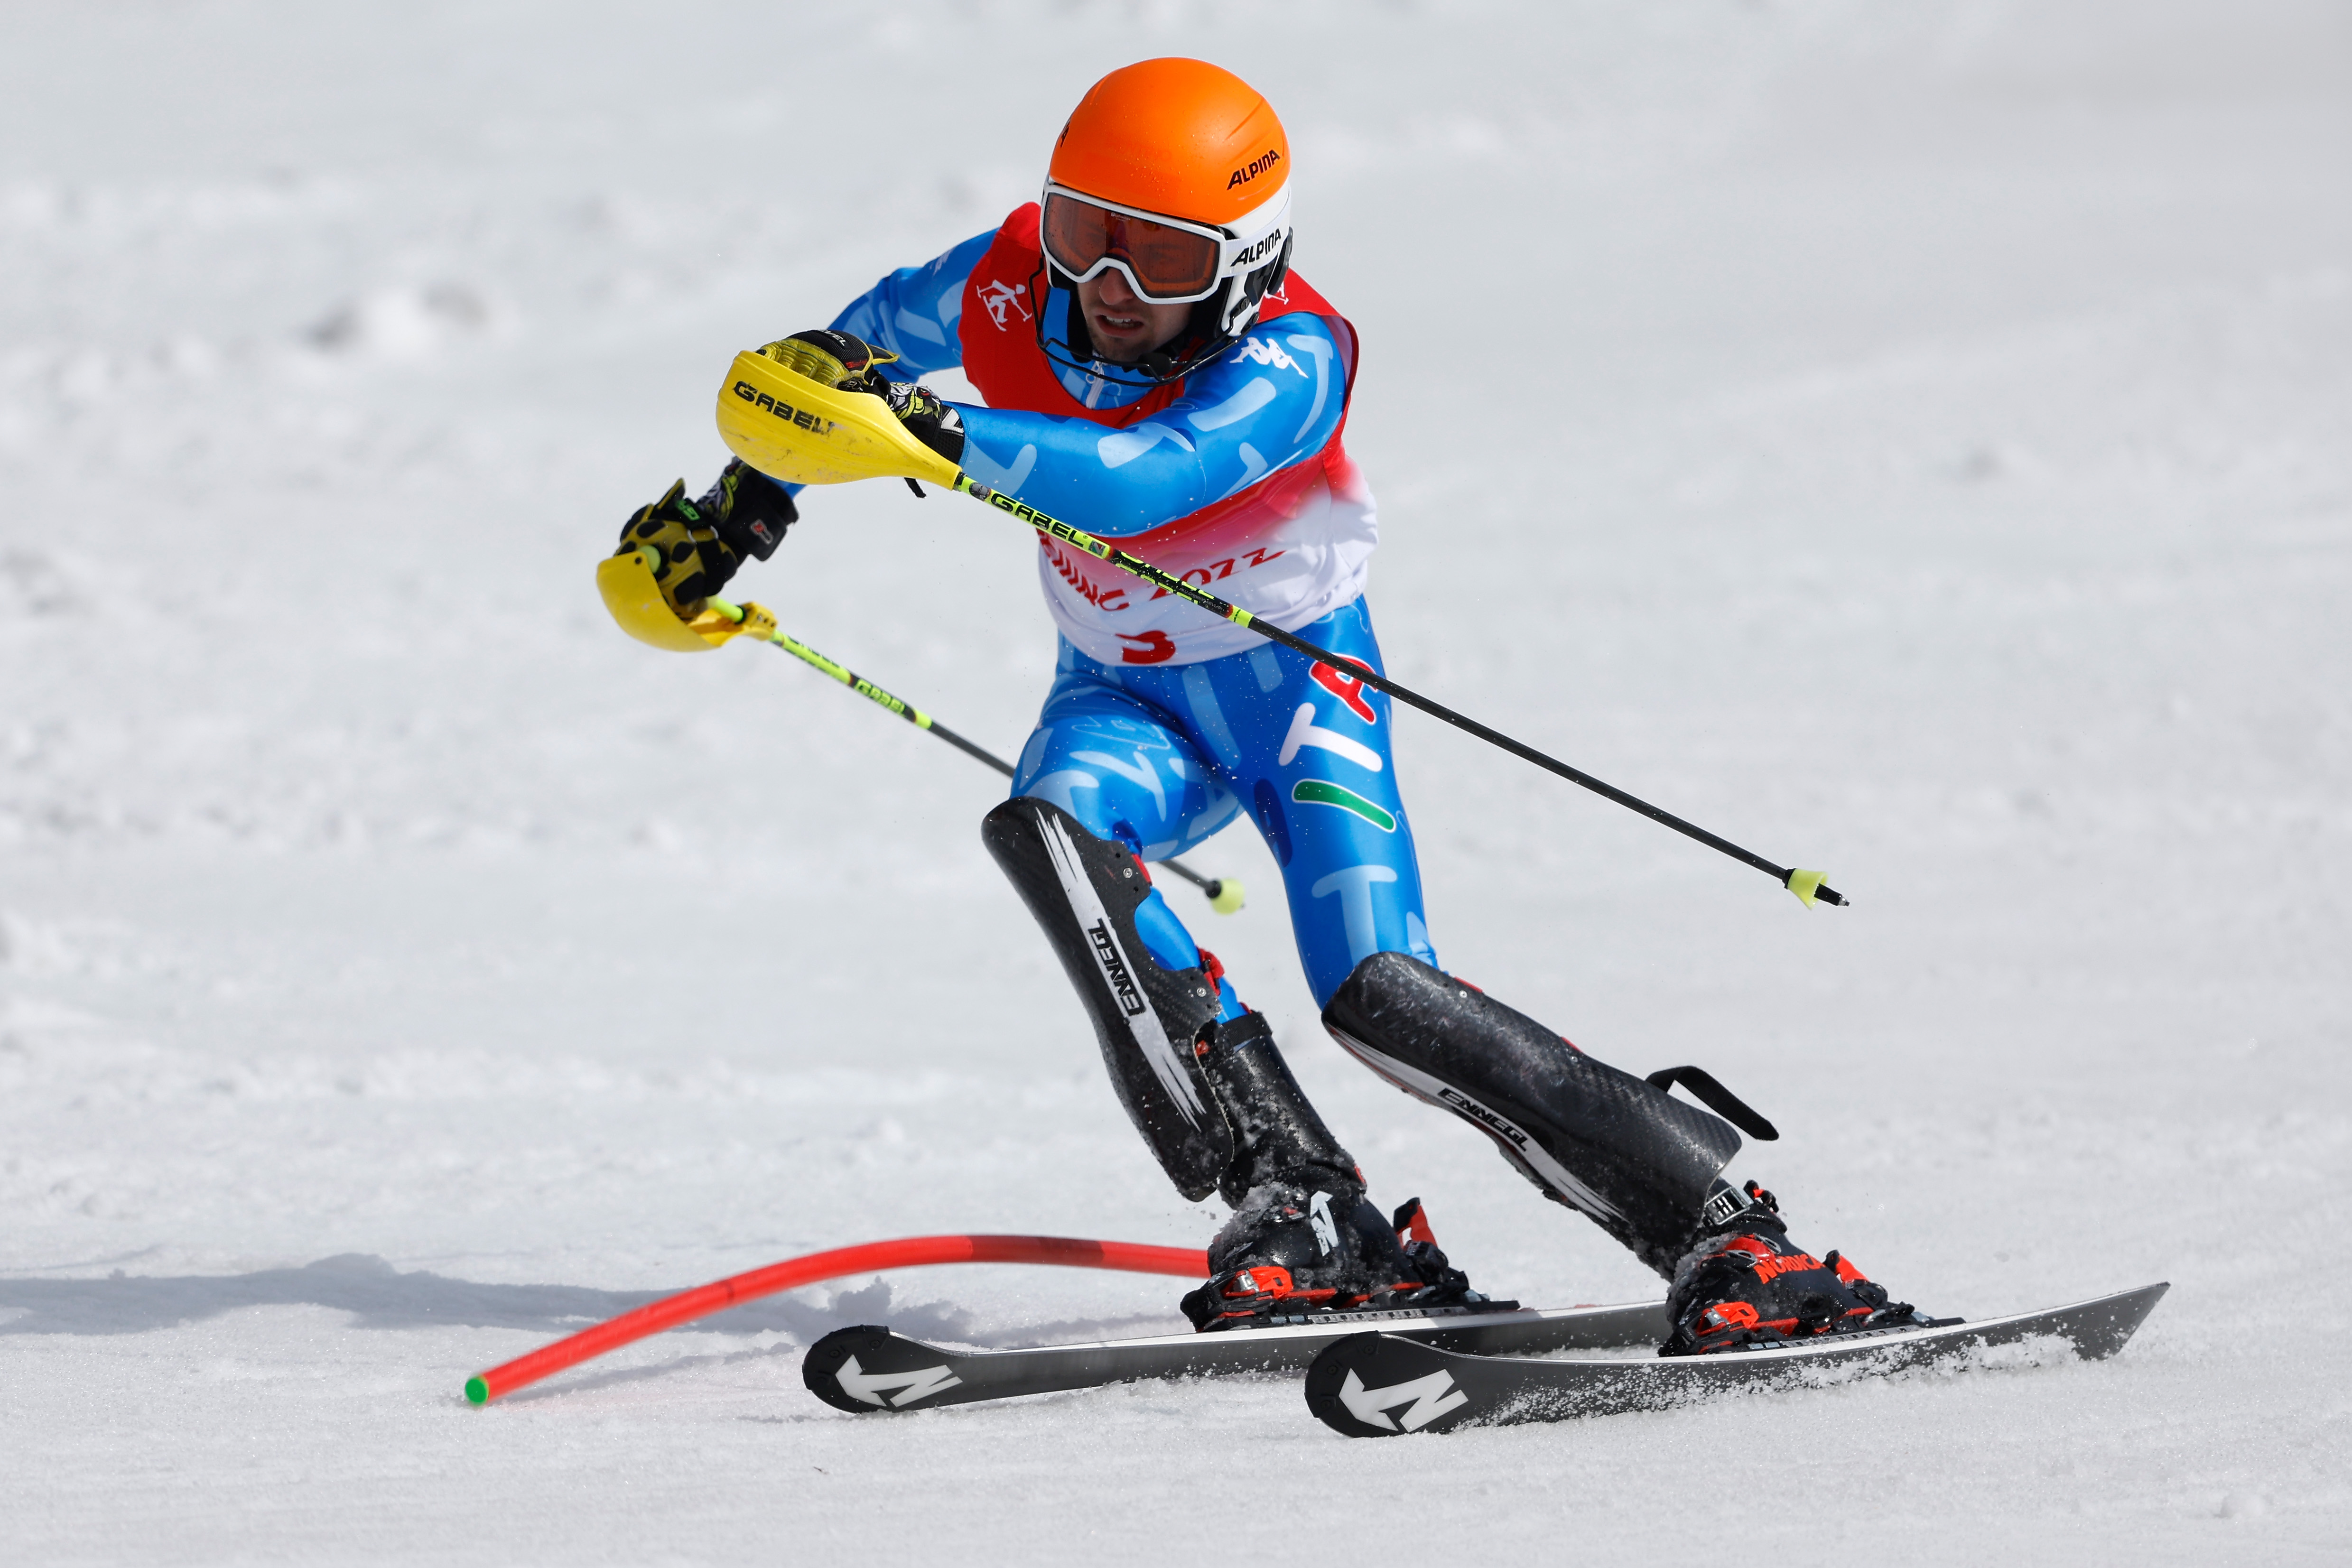 Photos of Paralympic alpine skiers